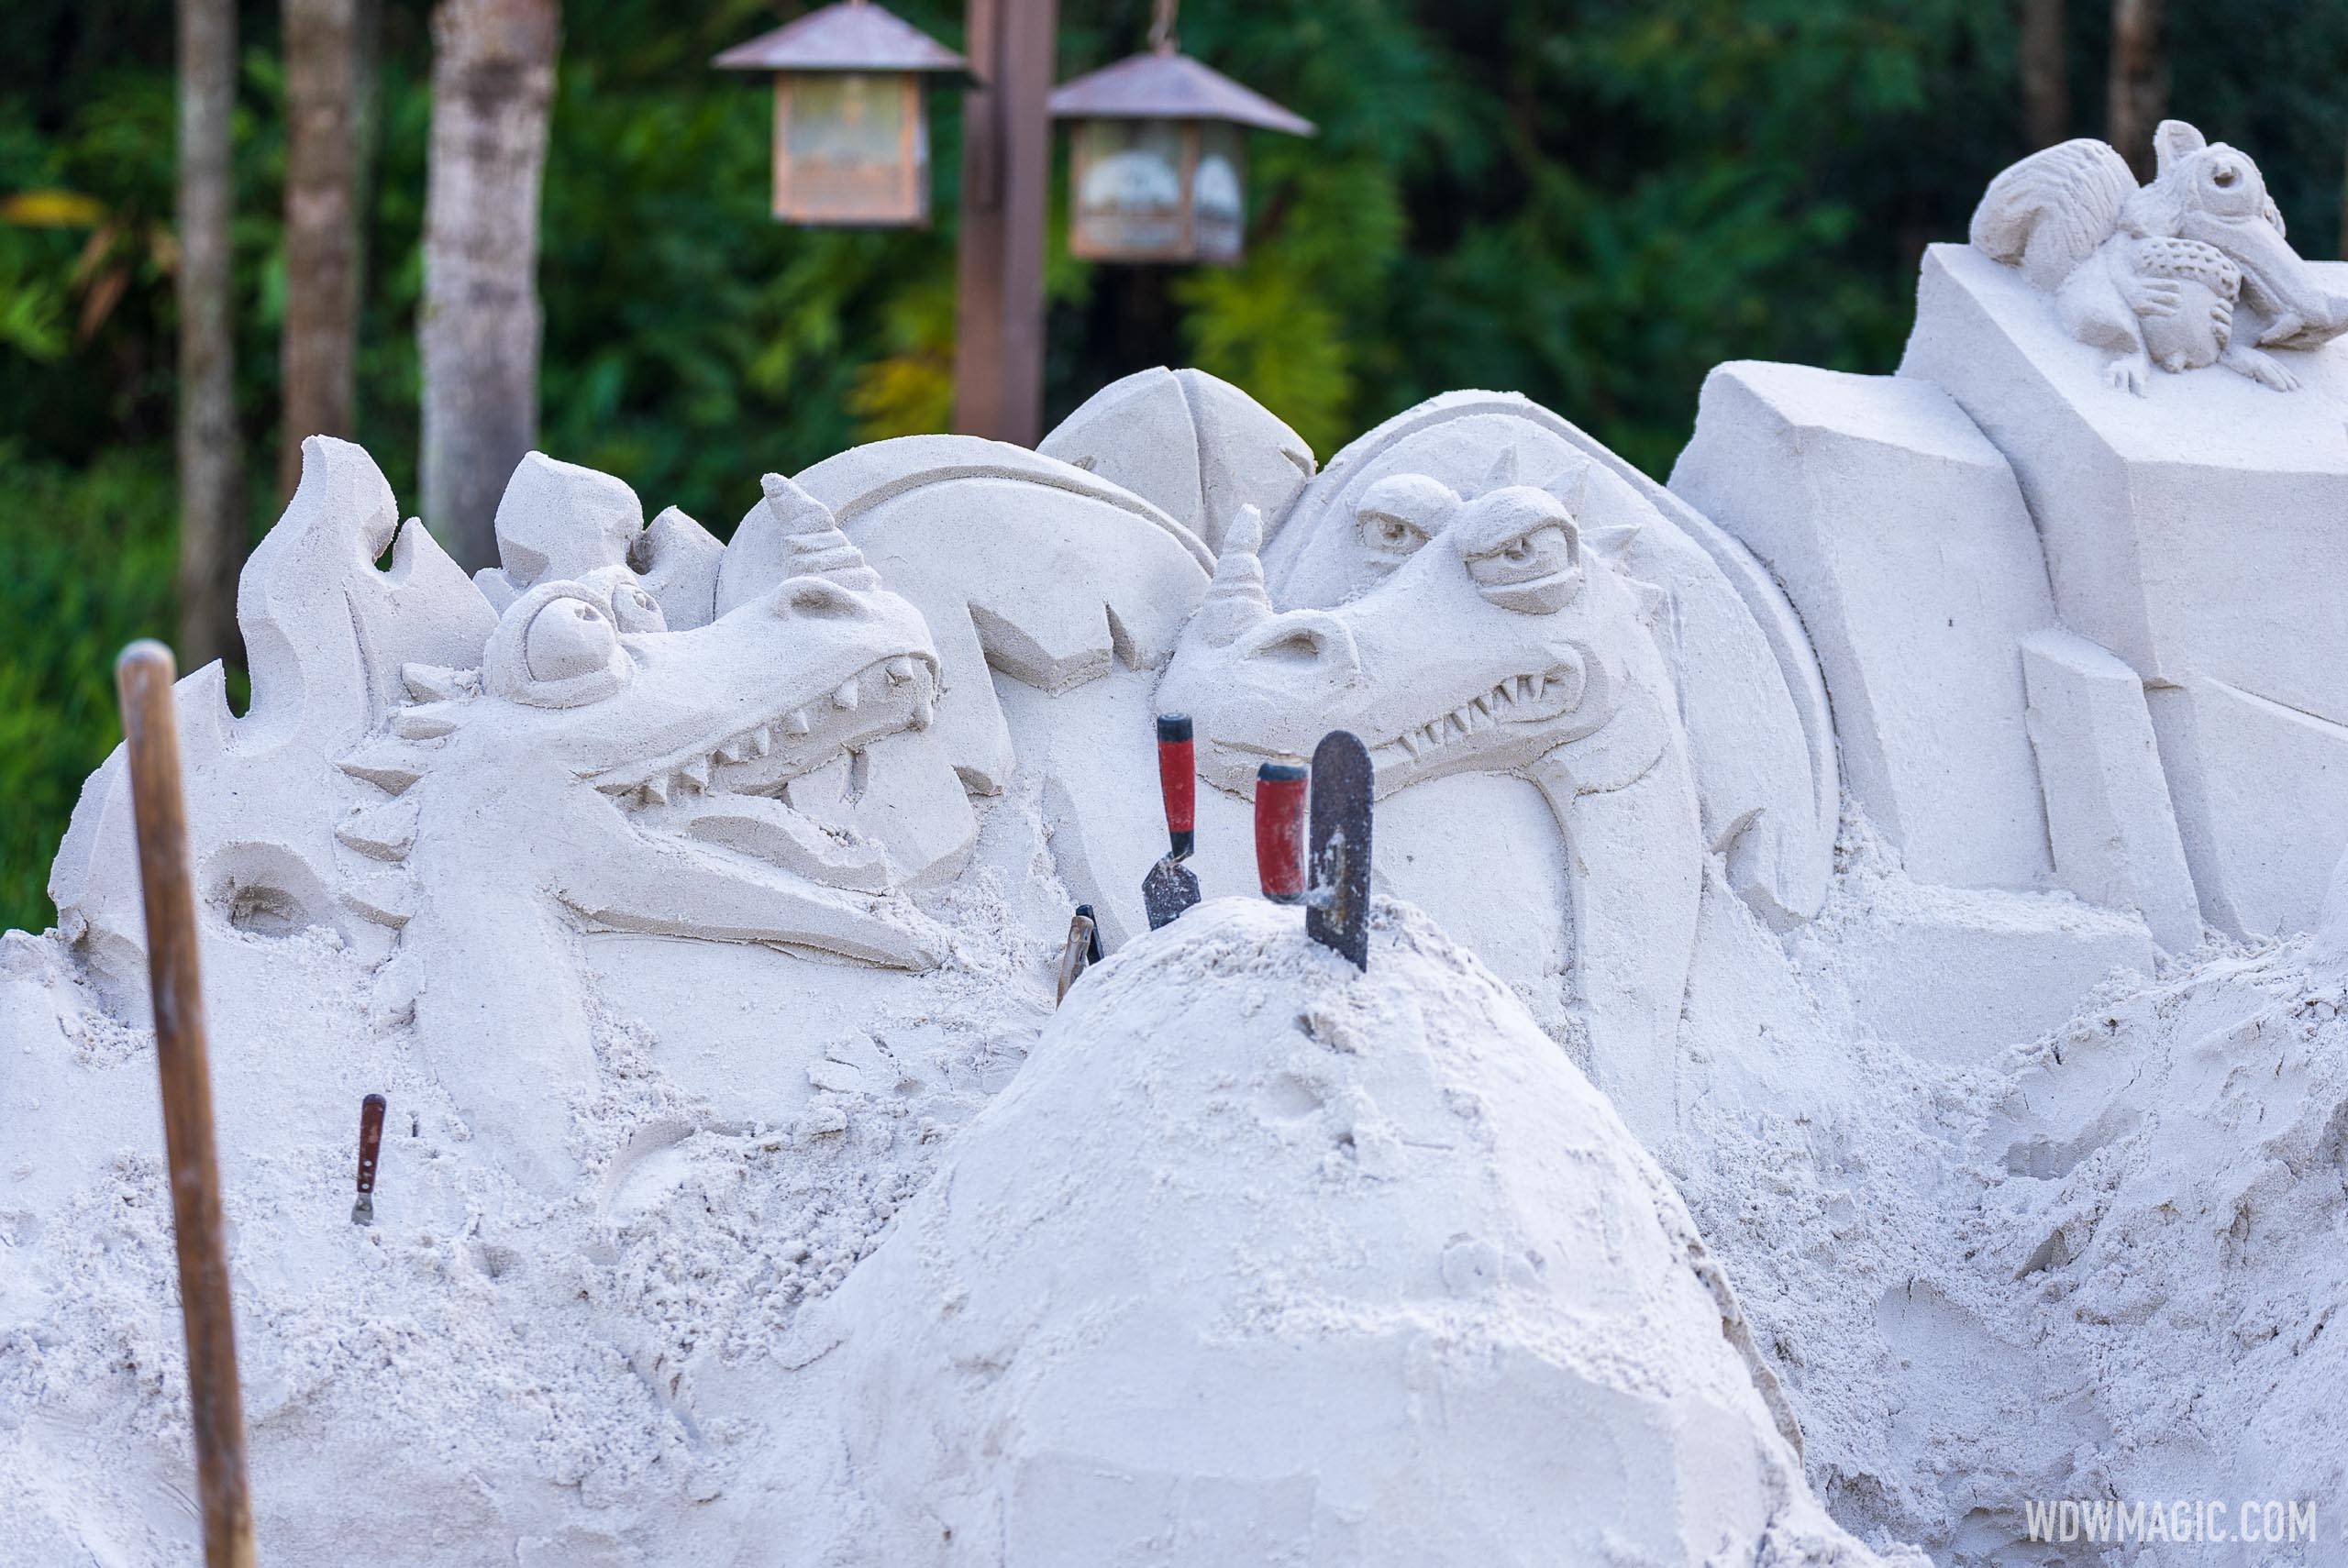 New Sand Sculpture Being Installed at Disney's Animal Kingdom